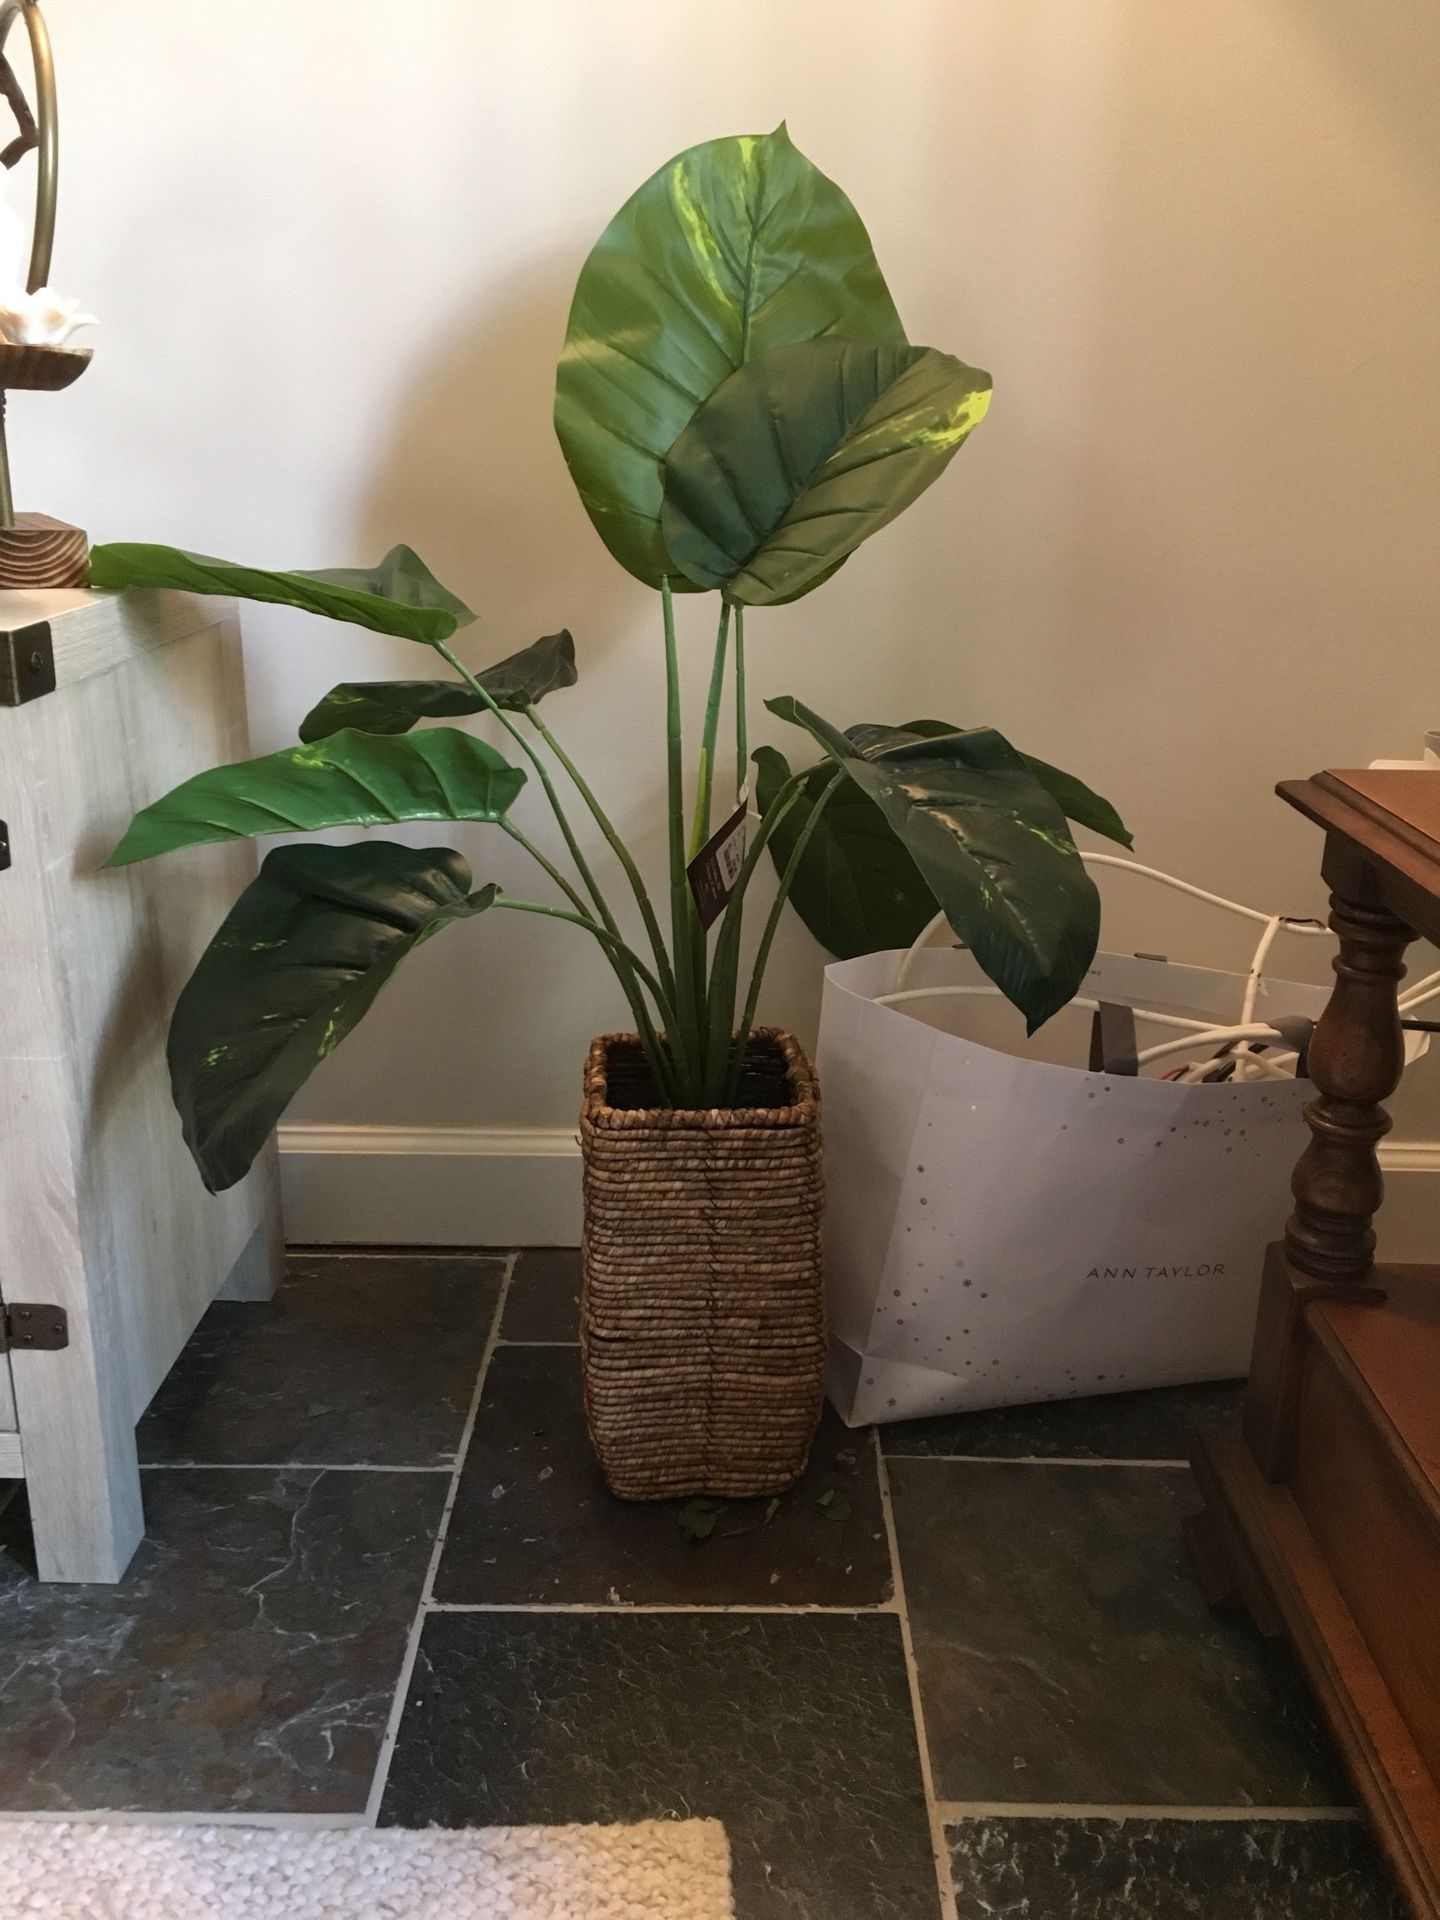 Two decorative plants